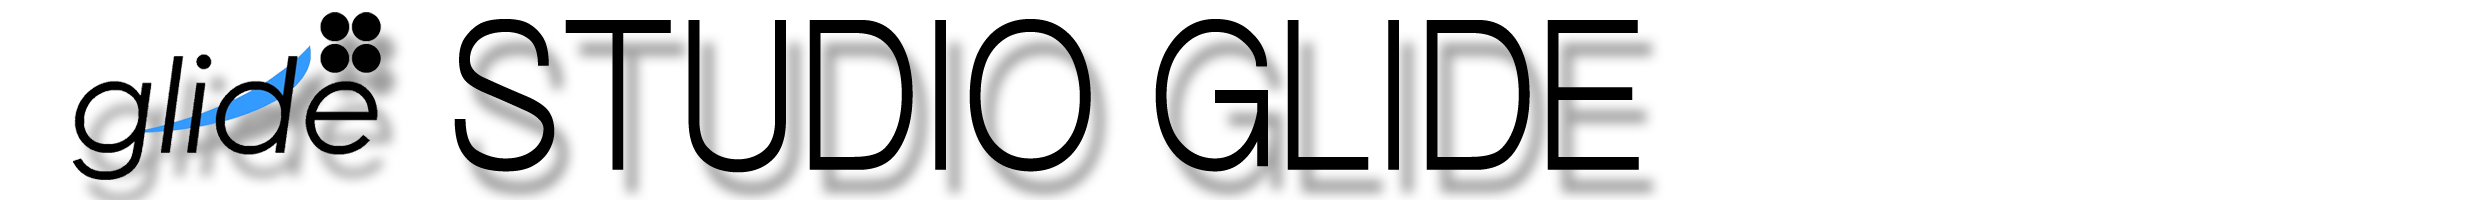 glide's logo